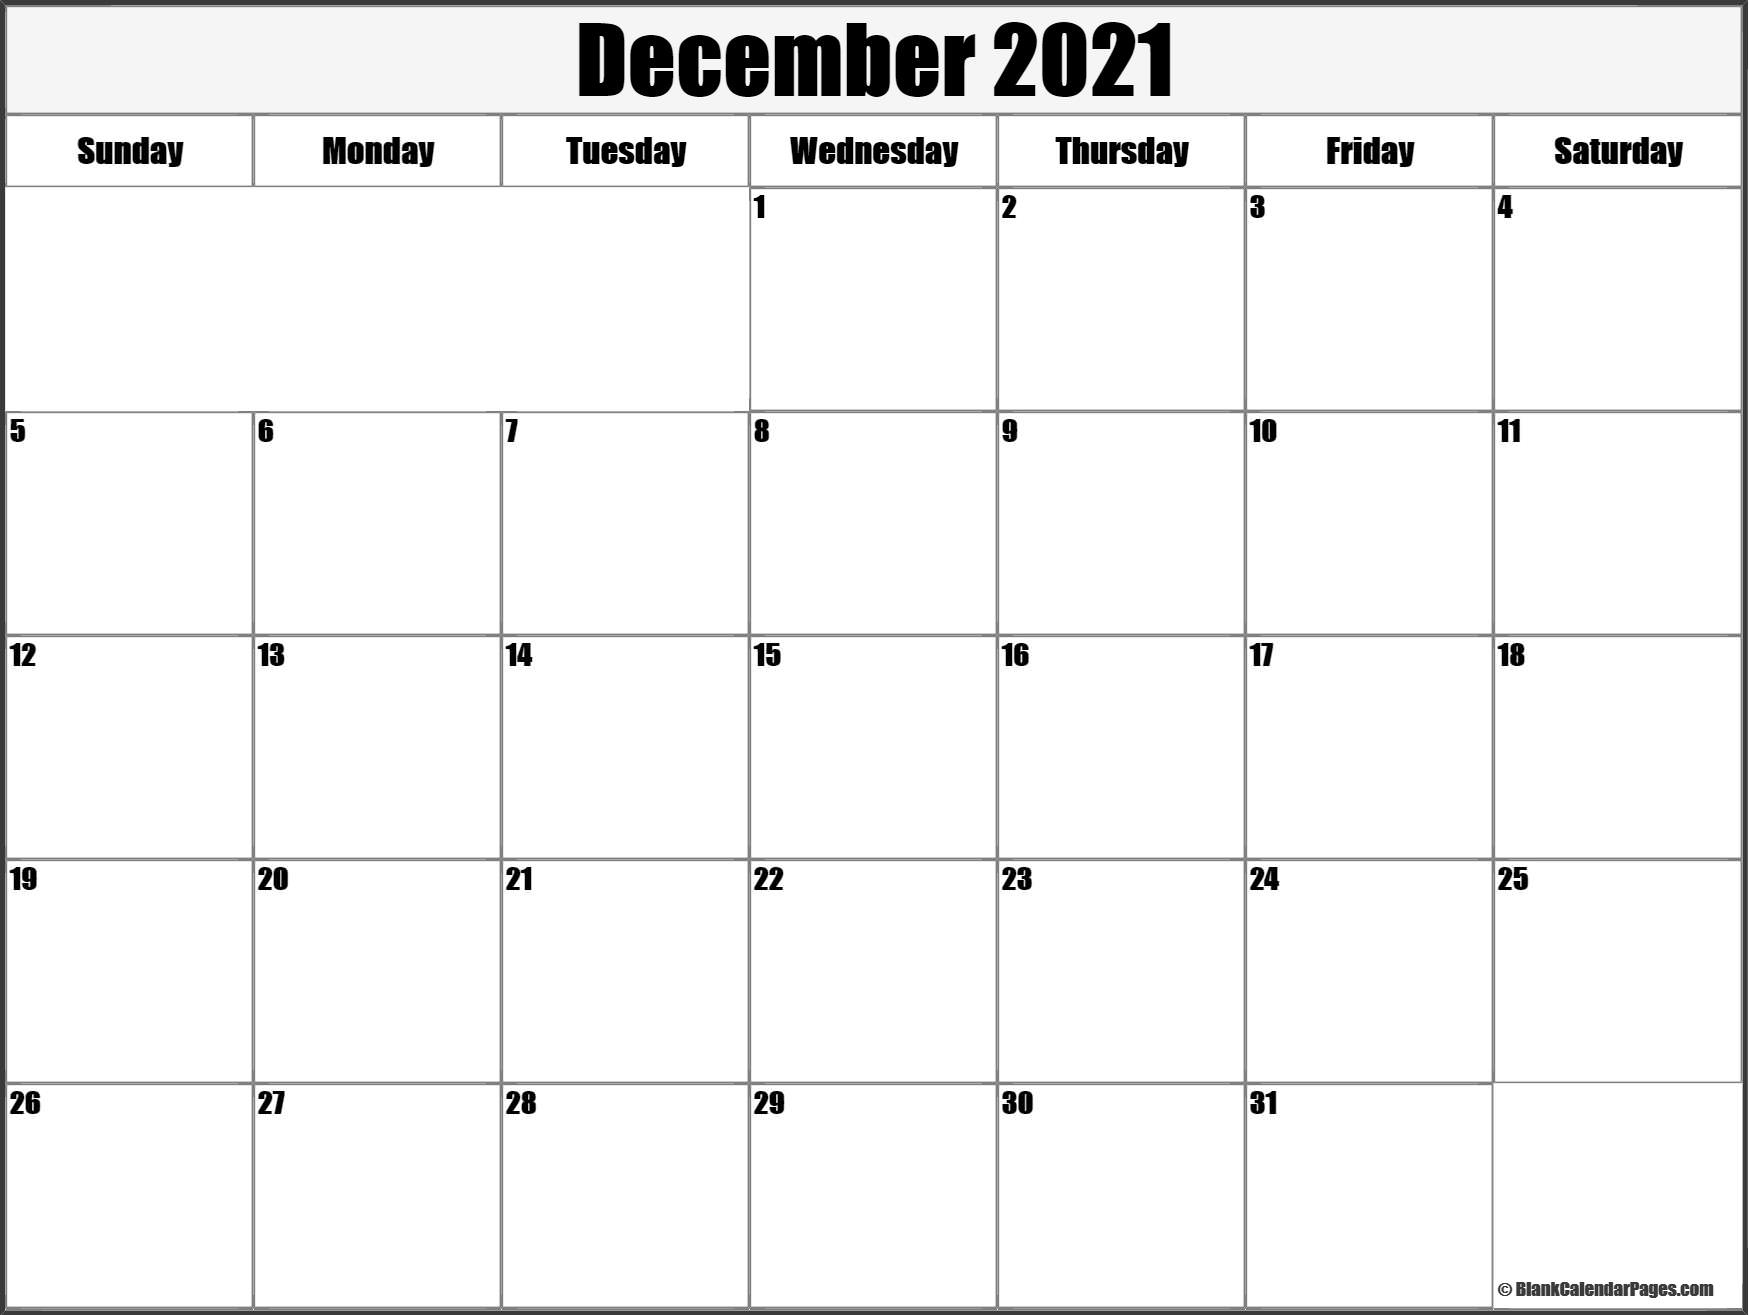 December 2021 Blank Calendar Templates. December 2020 Through March 2021 Calendar